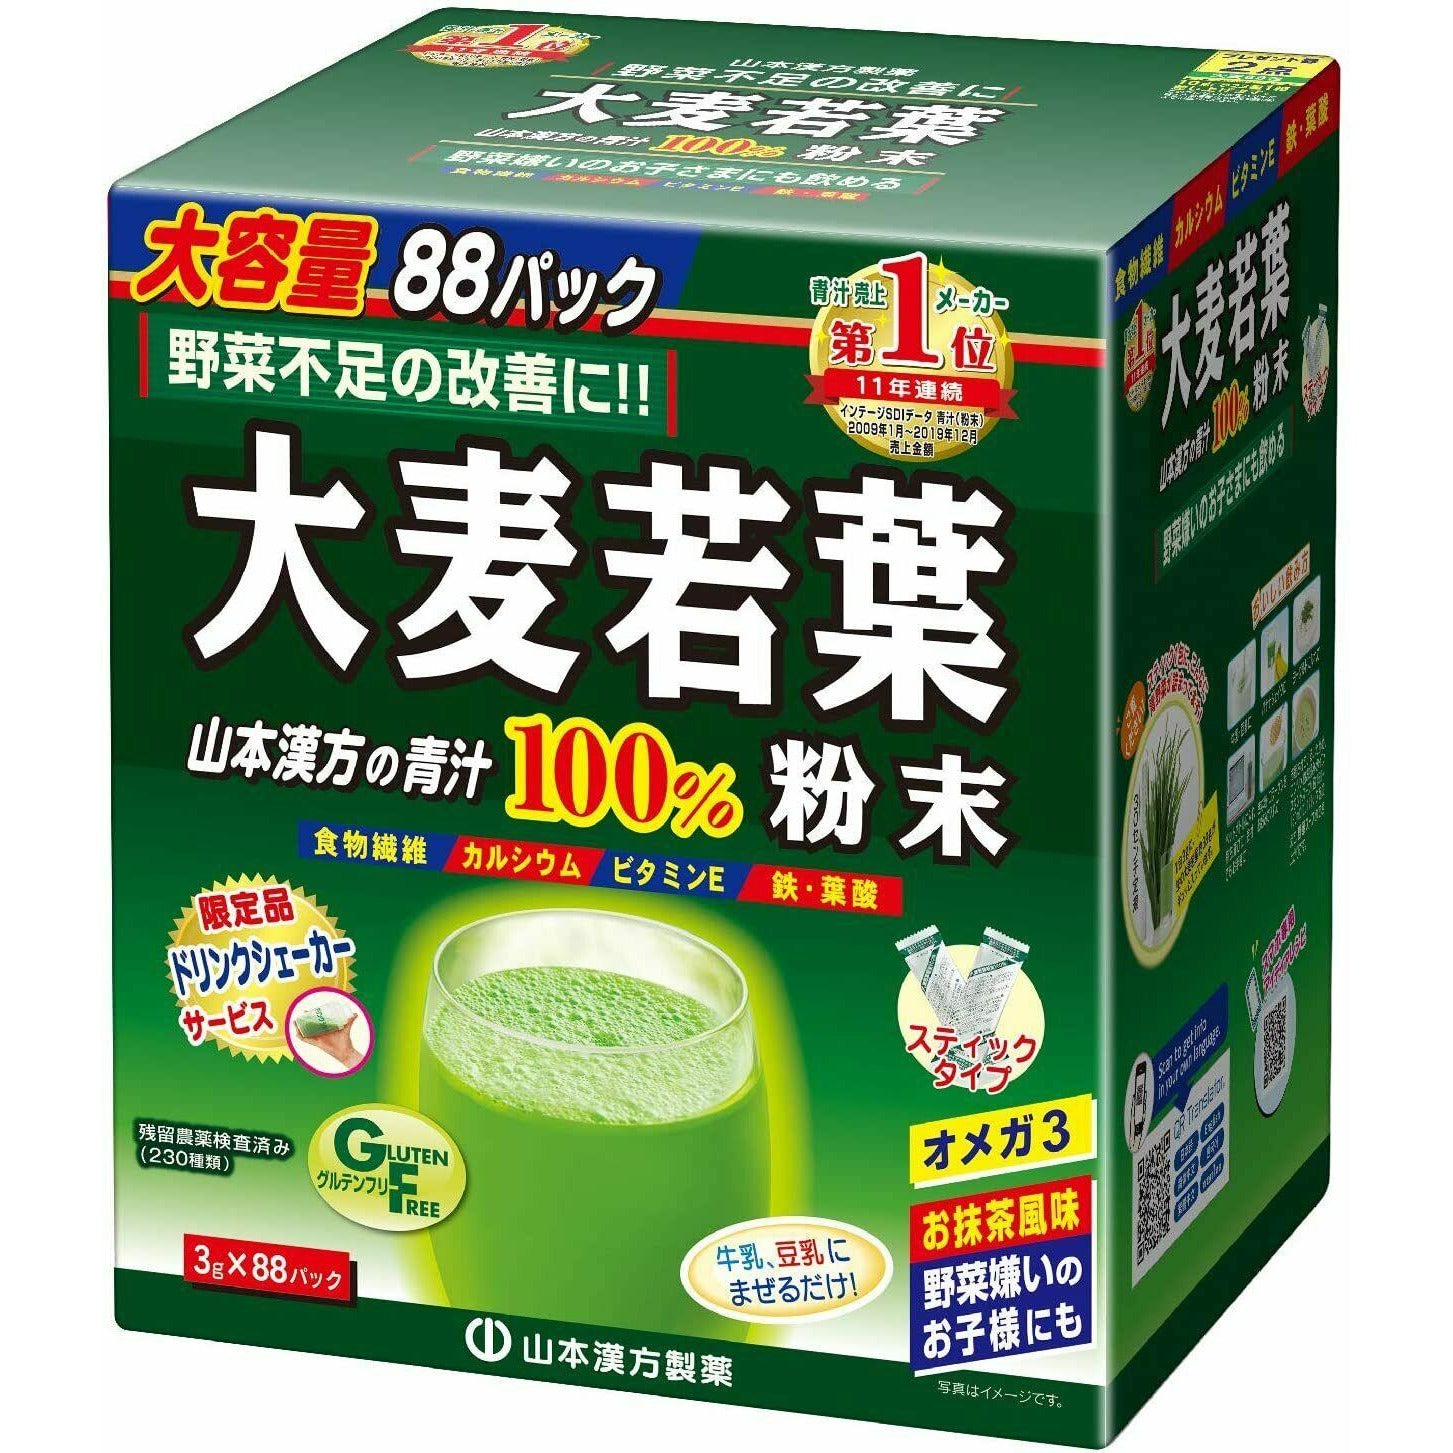  Yamamoto Kanpo Barley Young Leaf 100% 3g x 88 packets Green juice